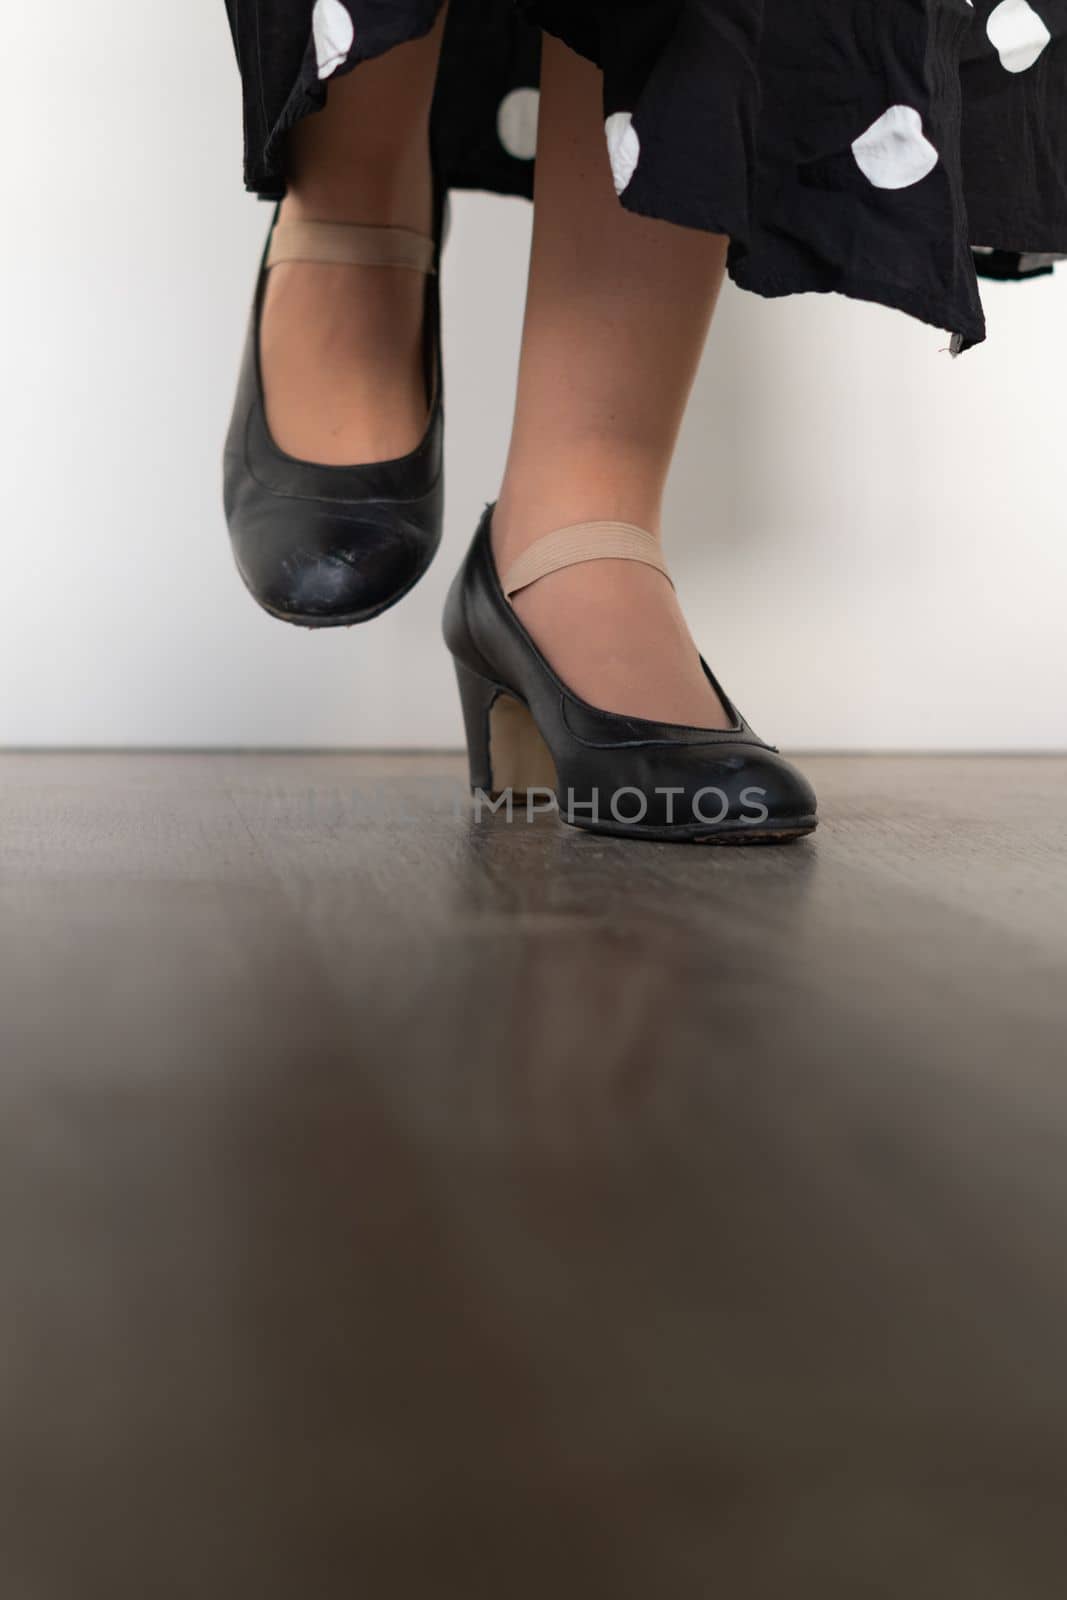 legs of a woman dancing flamenco by joseantona